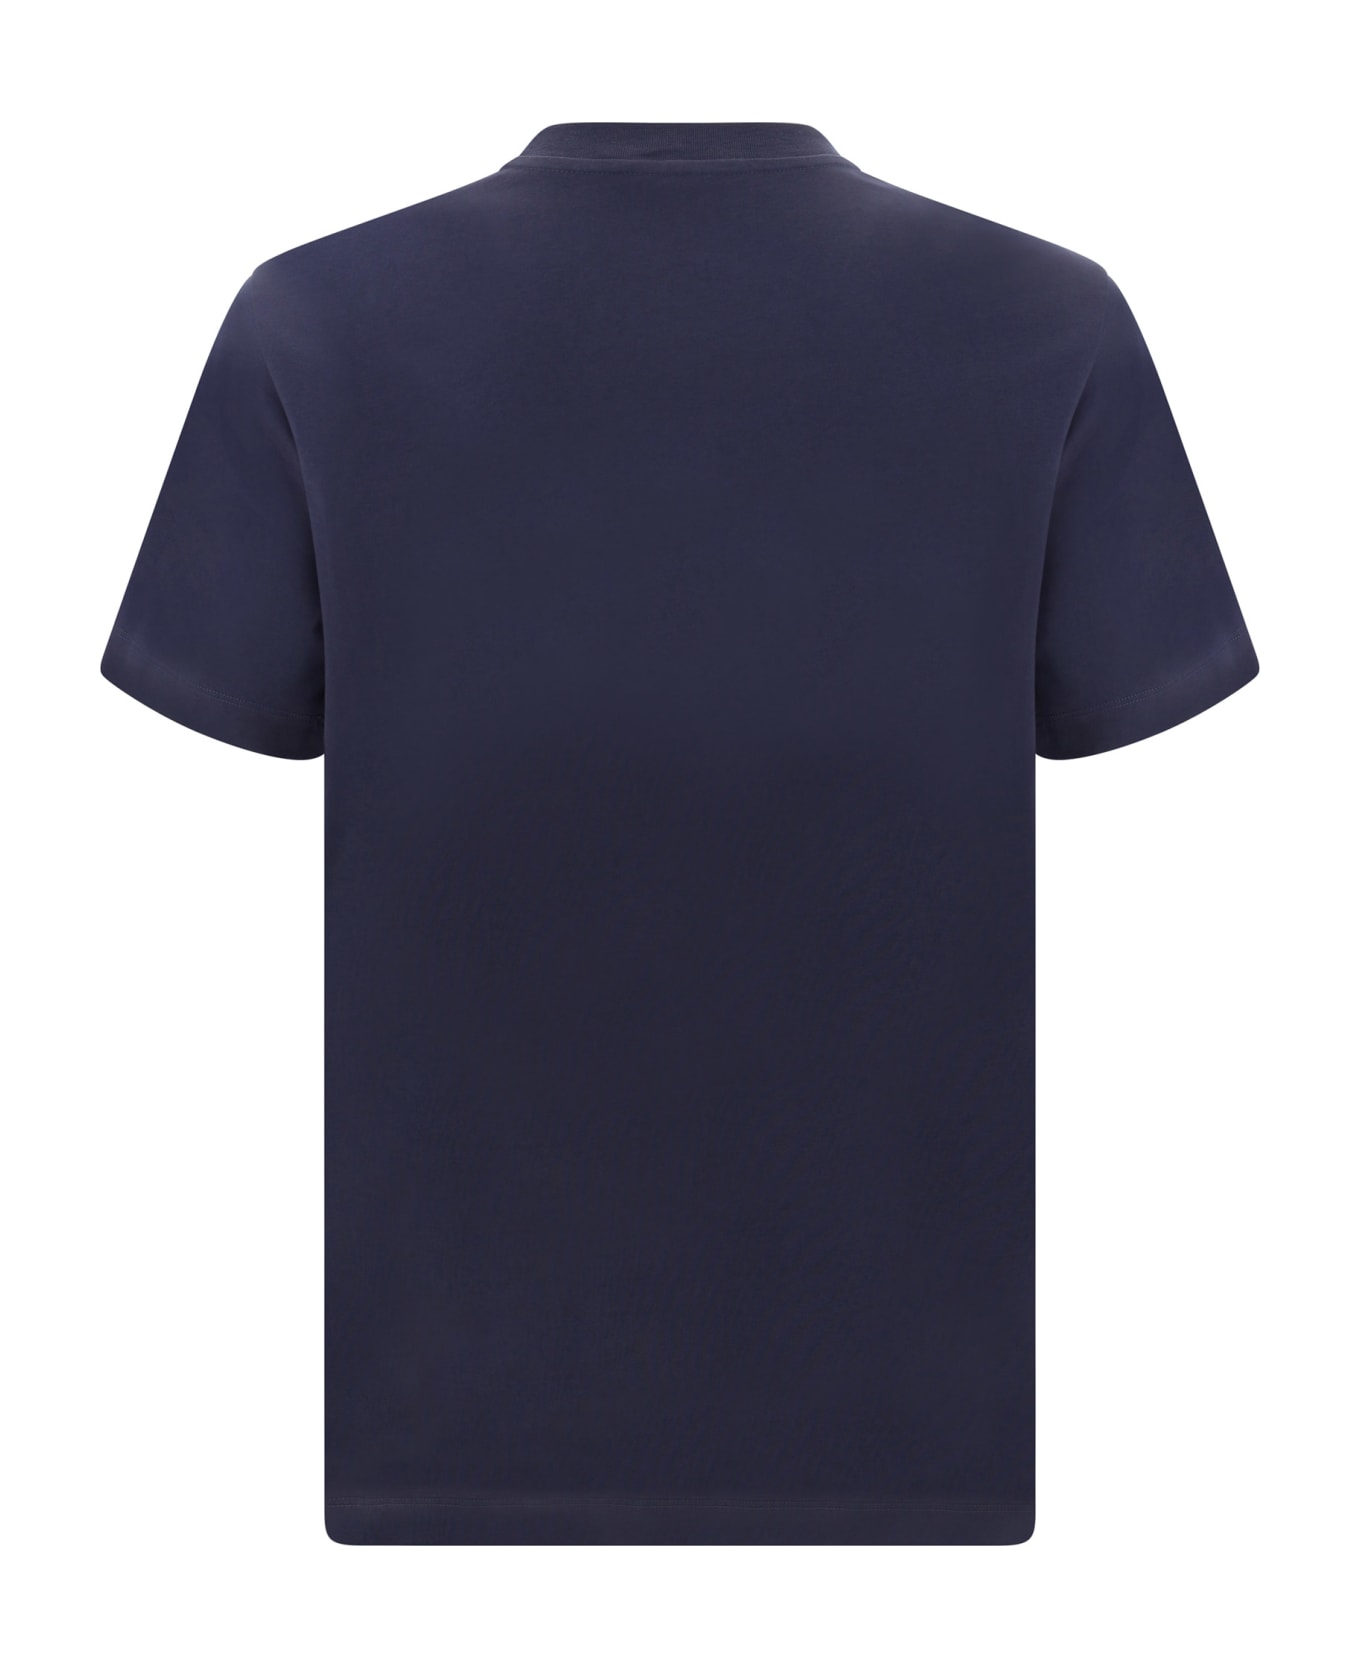 Marni T-shirt - Blue navy